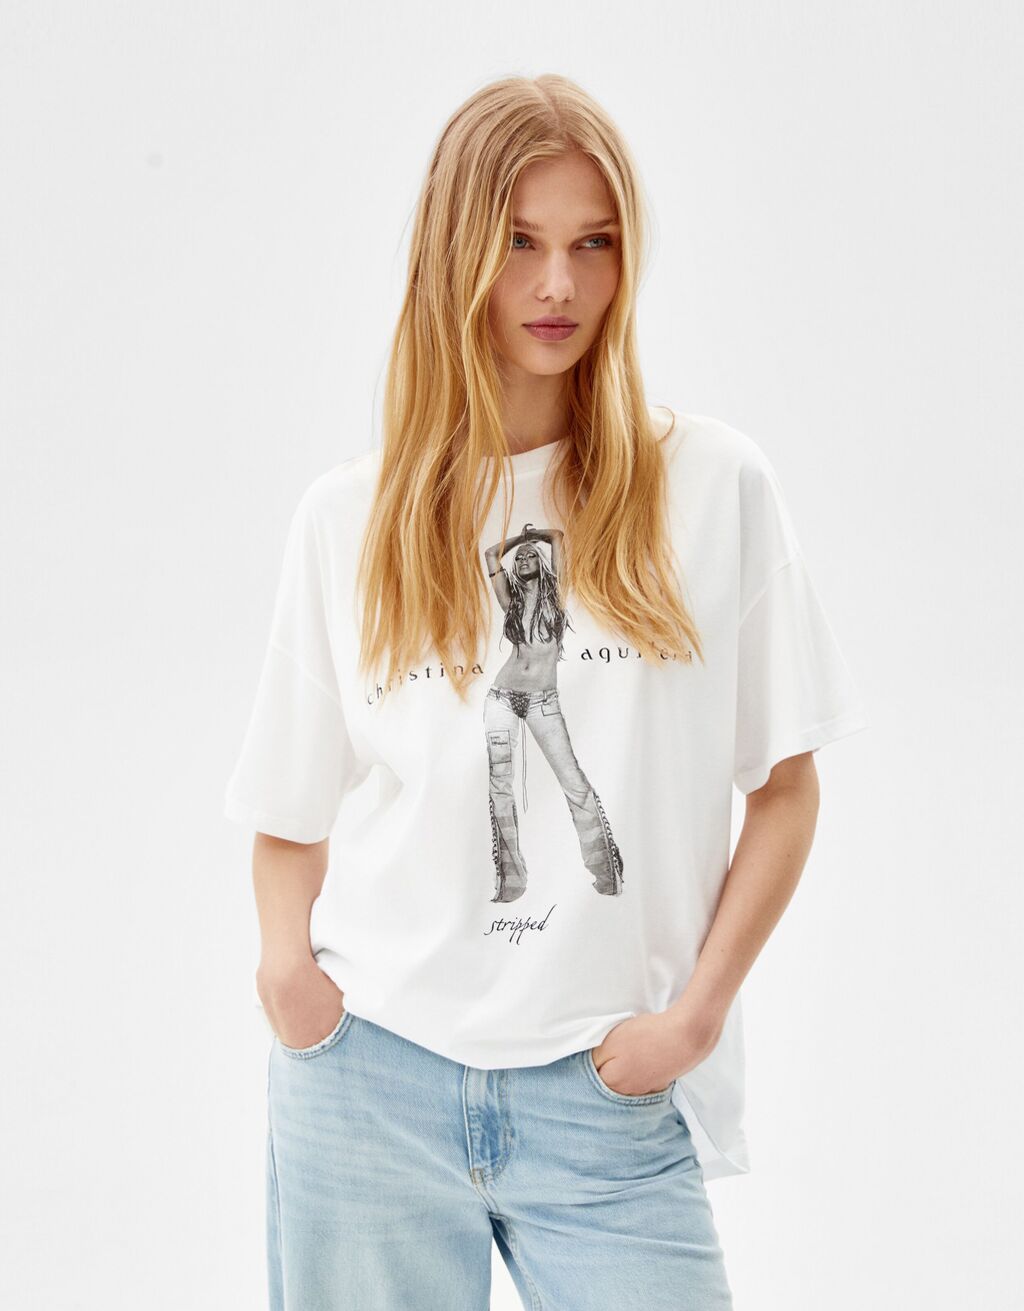 Short sleeve T-shirt with Cristina Aguilera print